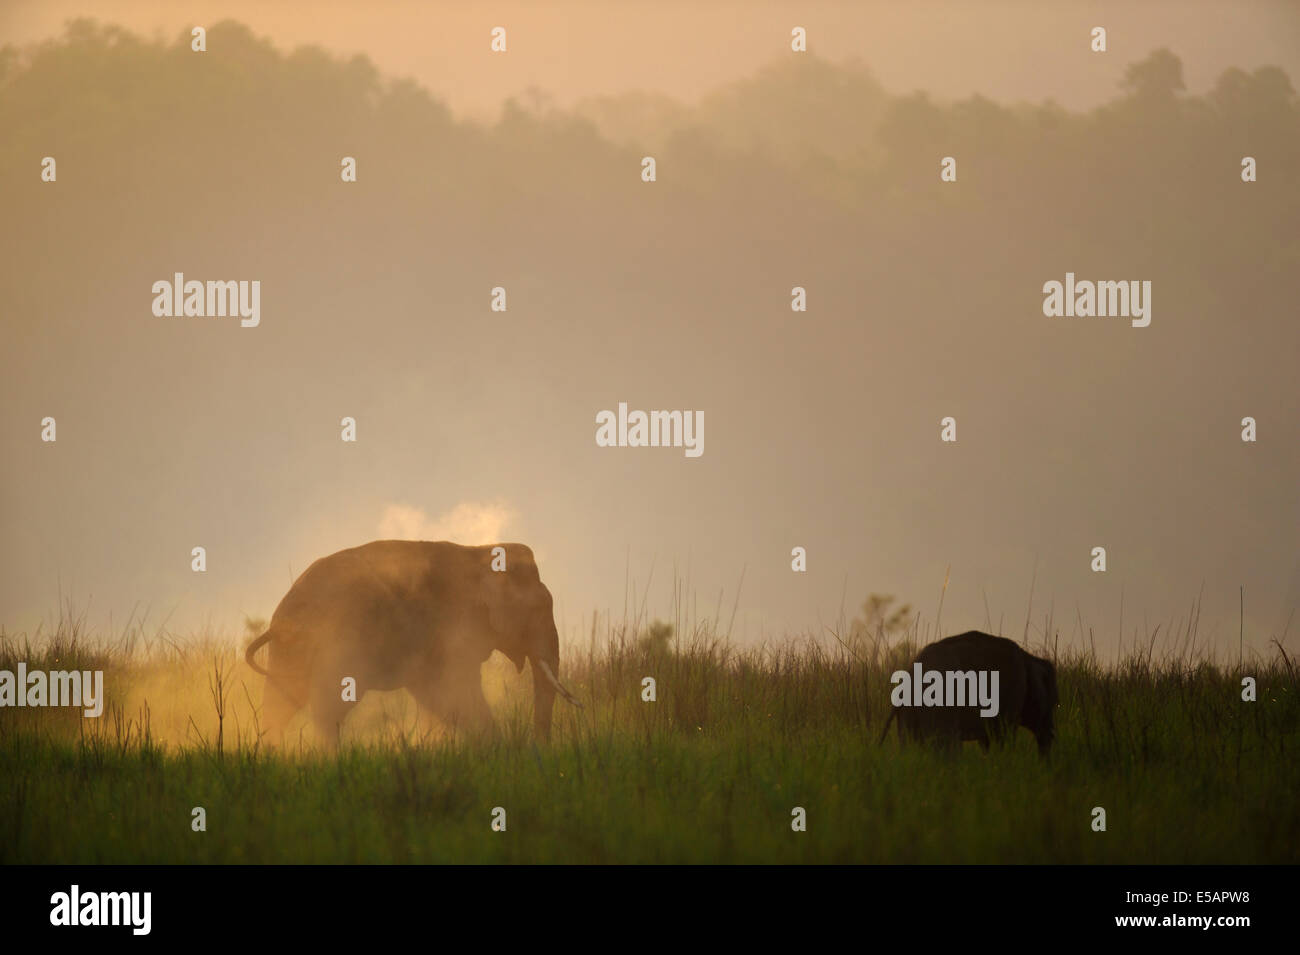 Elefanten im Grünland Stockfoto